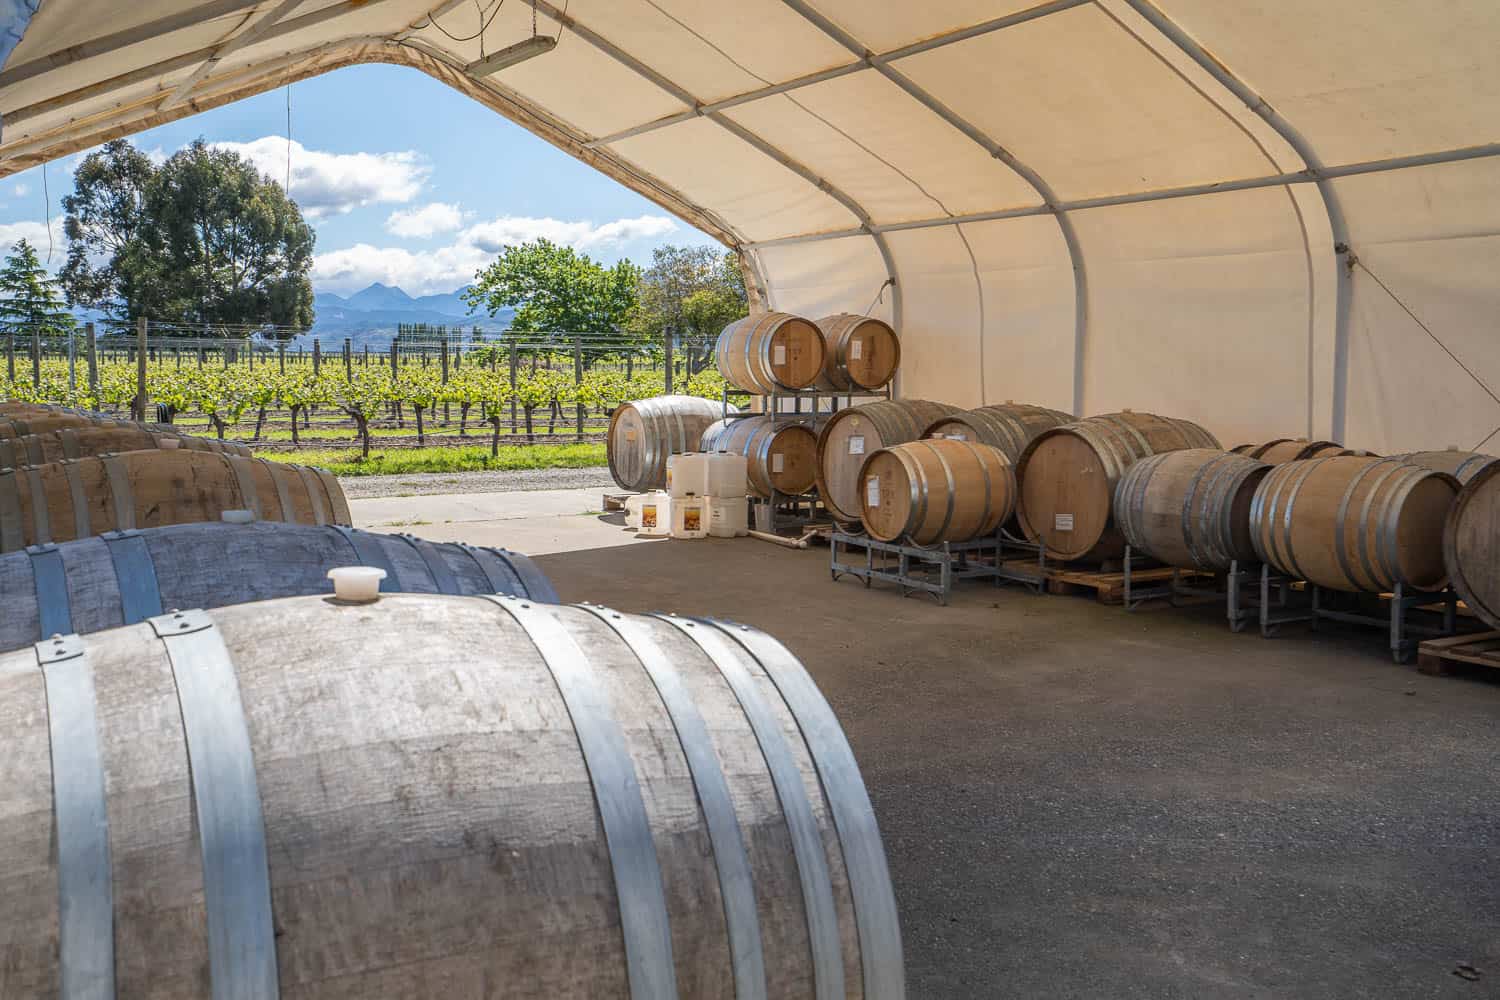 Wine barrels and vineyard at Te Whare Ra winery in Marlborough